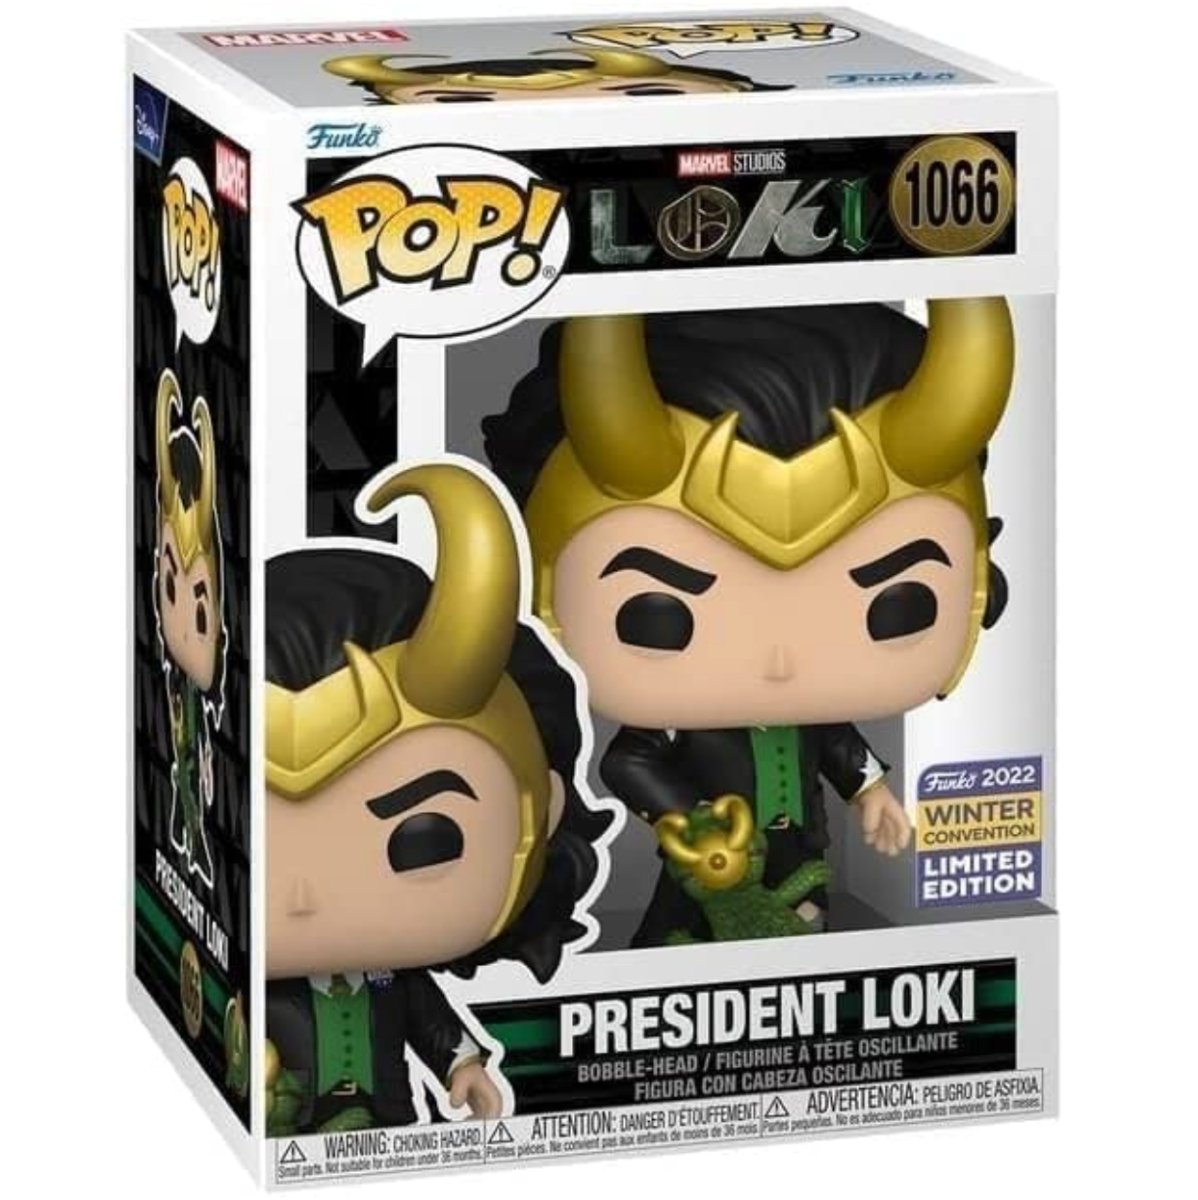 Loki - President Loki [with Alligator] (2022 Winter Convention Limited Edition) #1066 - Funko Pop! Vinyl Marvel - Persona Toys